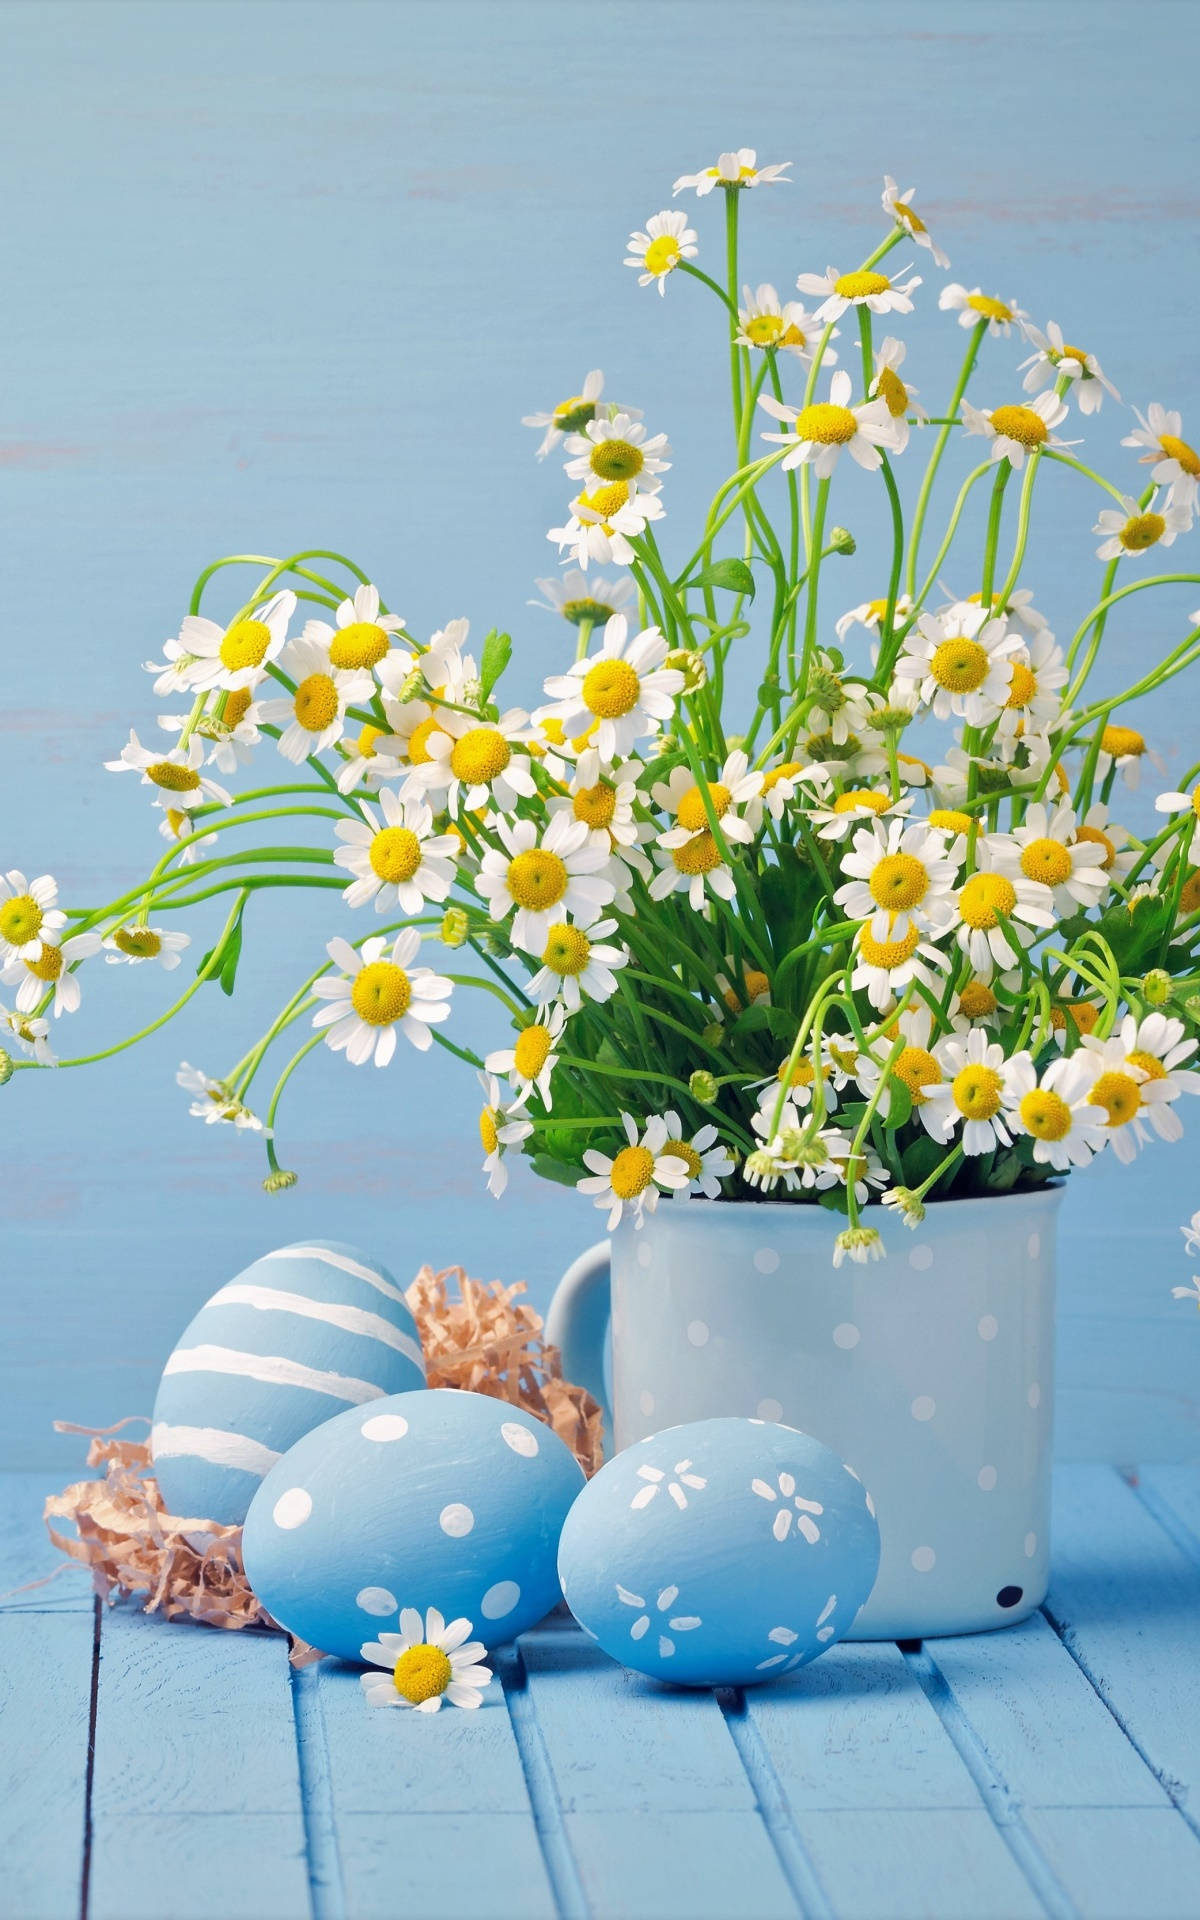 Unlock a Joyful Easter with a new Phone Wallpaper